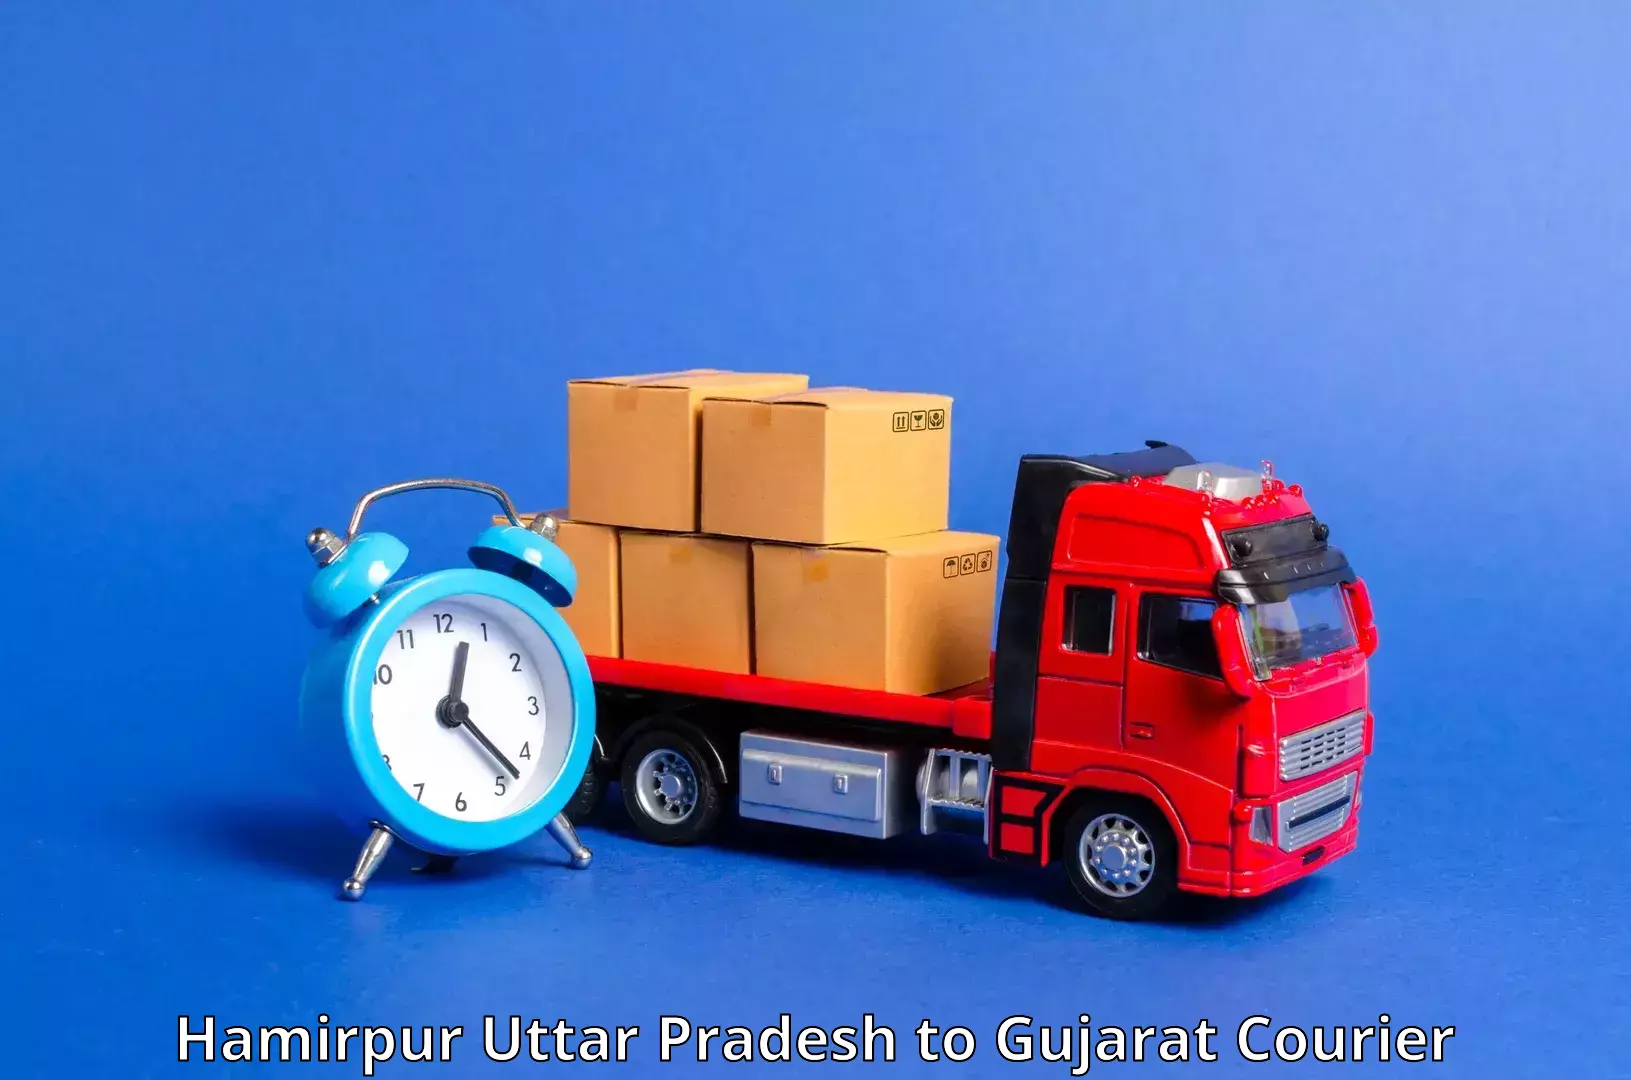 International parcel service Hamirpur Uttar Pradesh to Godhra